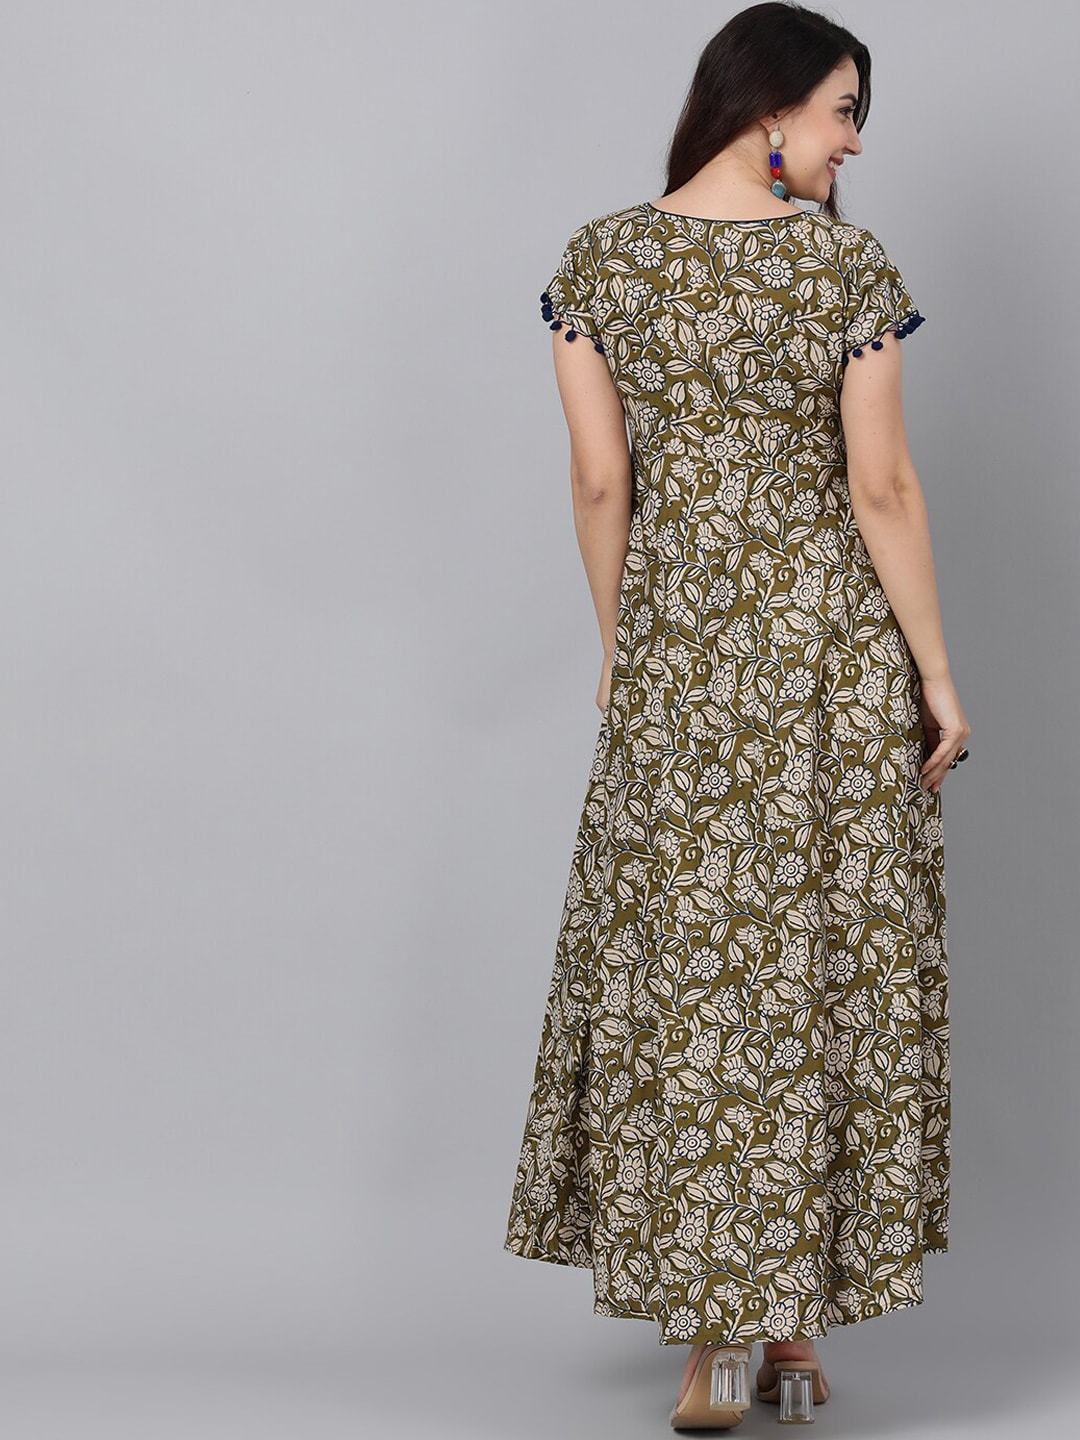 Women's  Olive Green & Beige Printed Maxi Dress - AKS